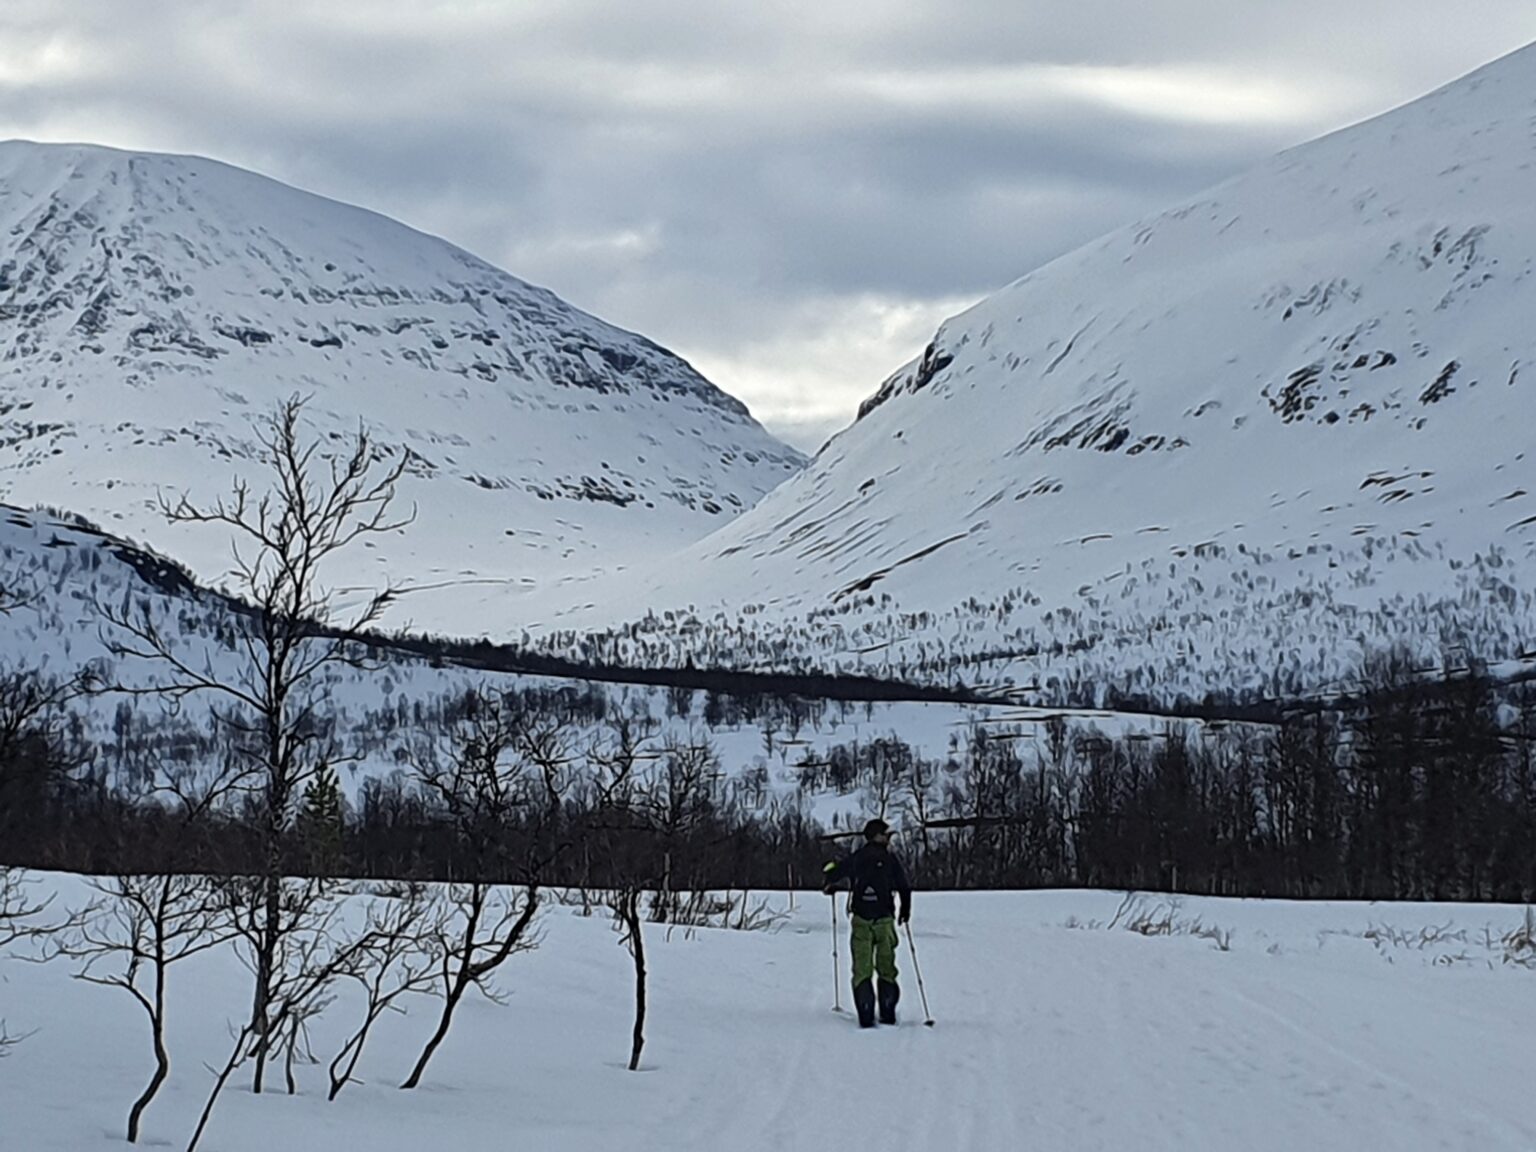 Ski touring past Camp Tamok towards the South face of Tamokfjellet